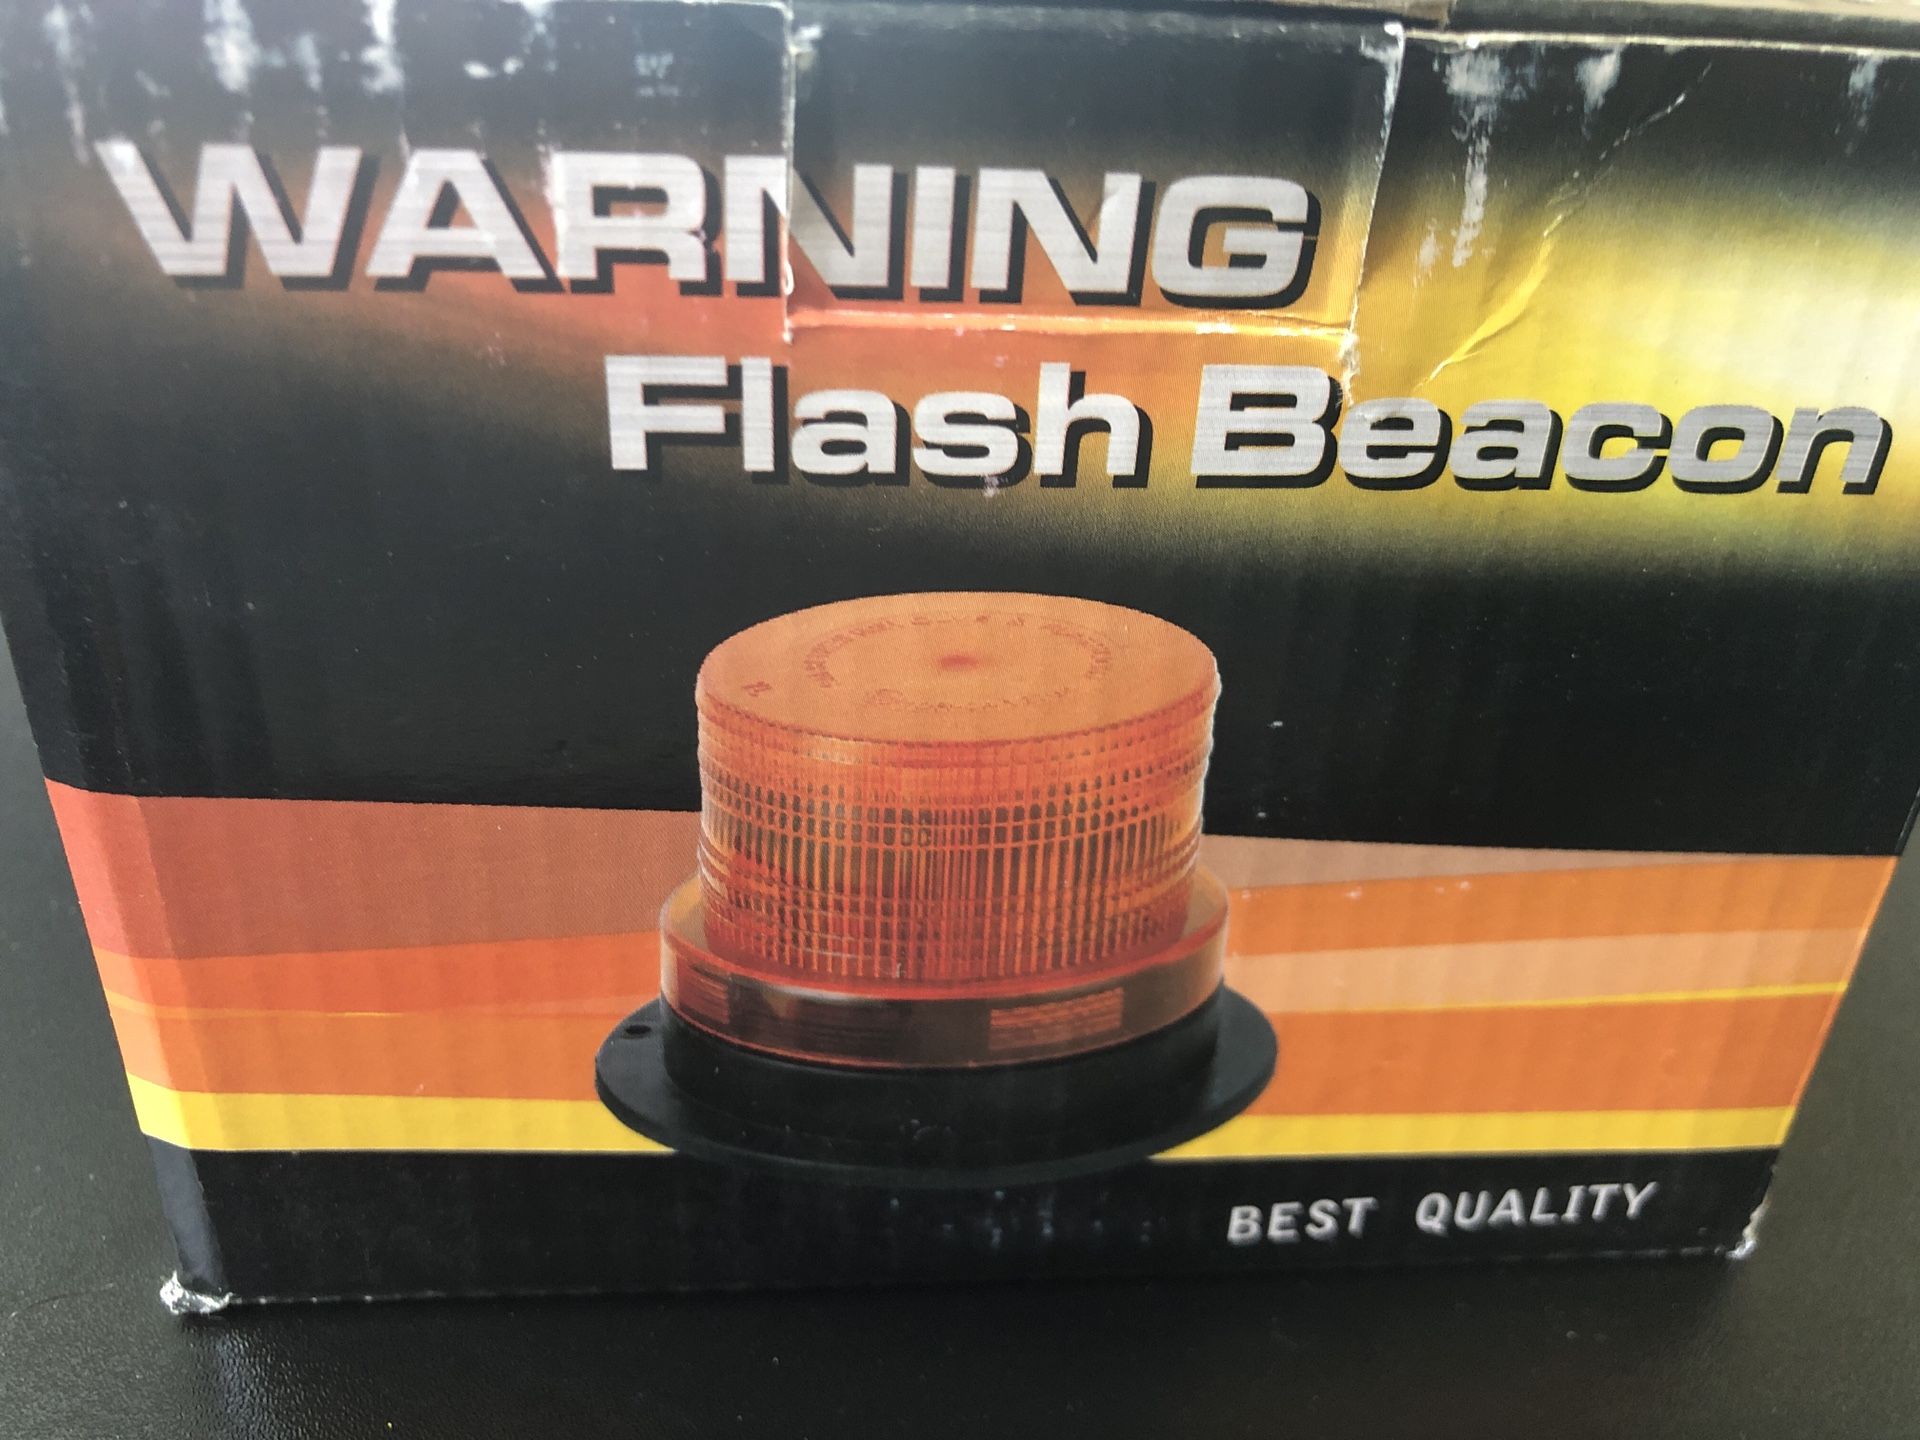 Brand new 5-1/8” warning flash beacon